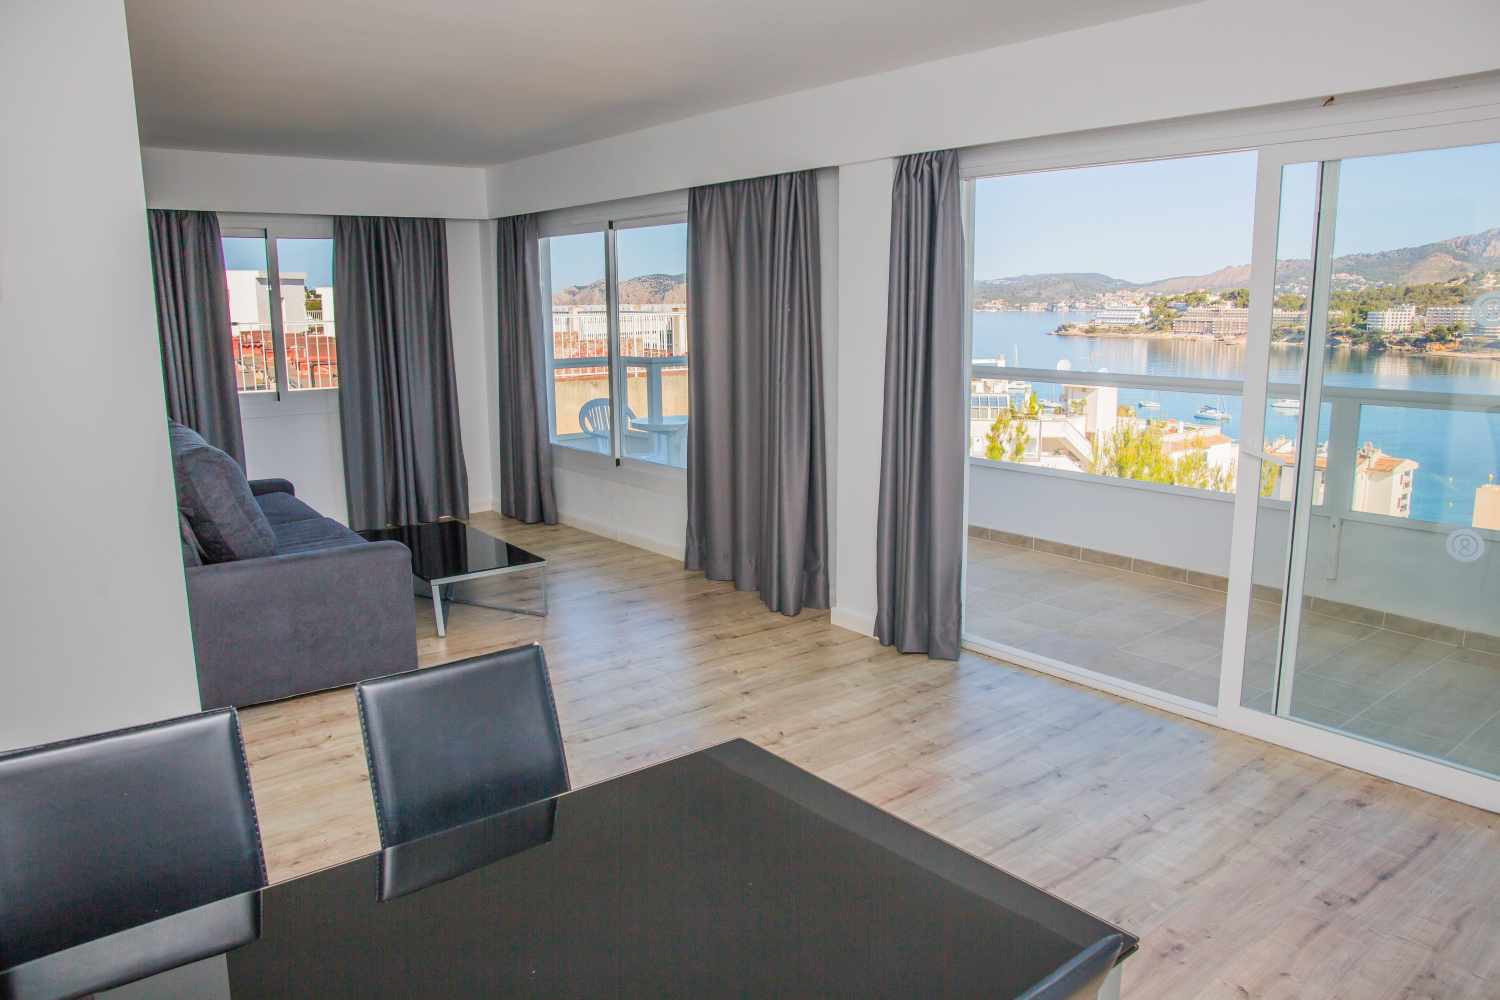 Apartamentos Mallorca Portofino